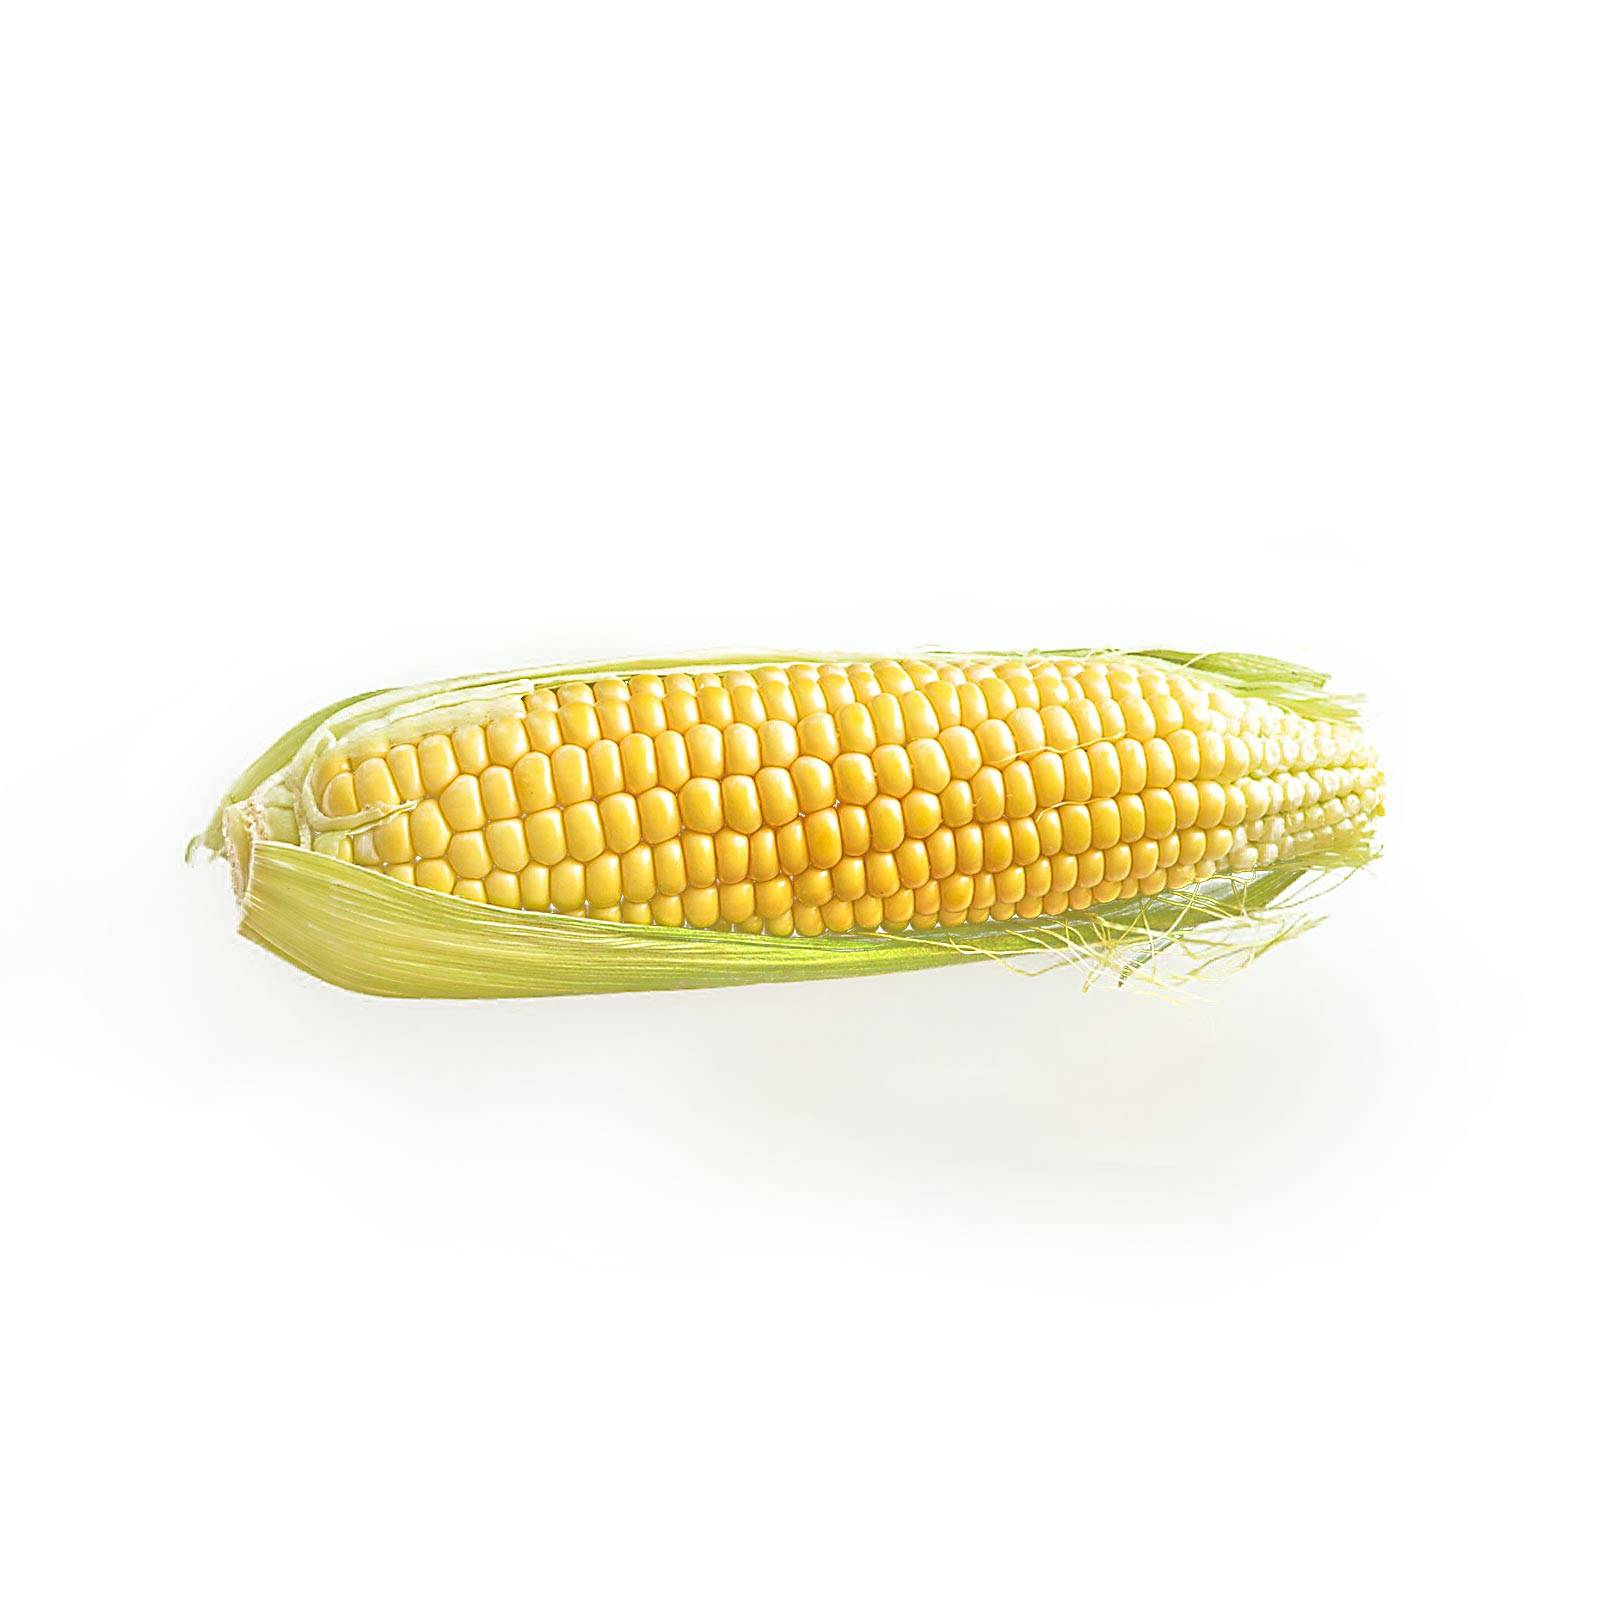 l_mais_pixabay_1600x1600 Gemüsejungpflanzen - Maispflanzen - Hofladen Altkö